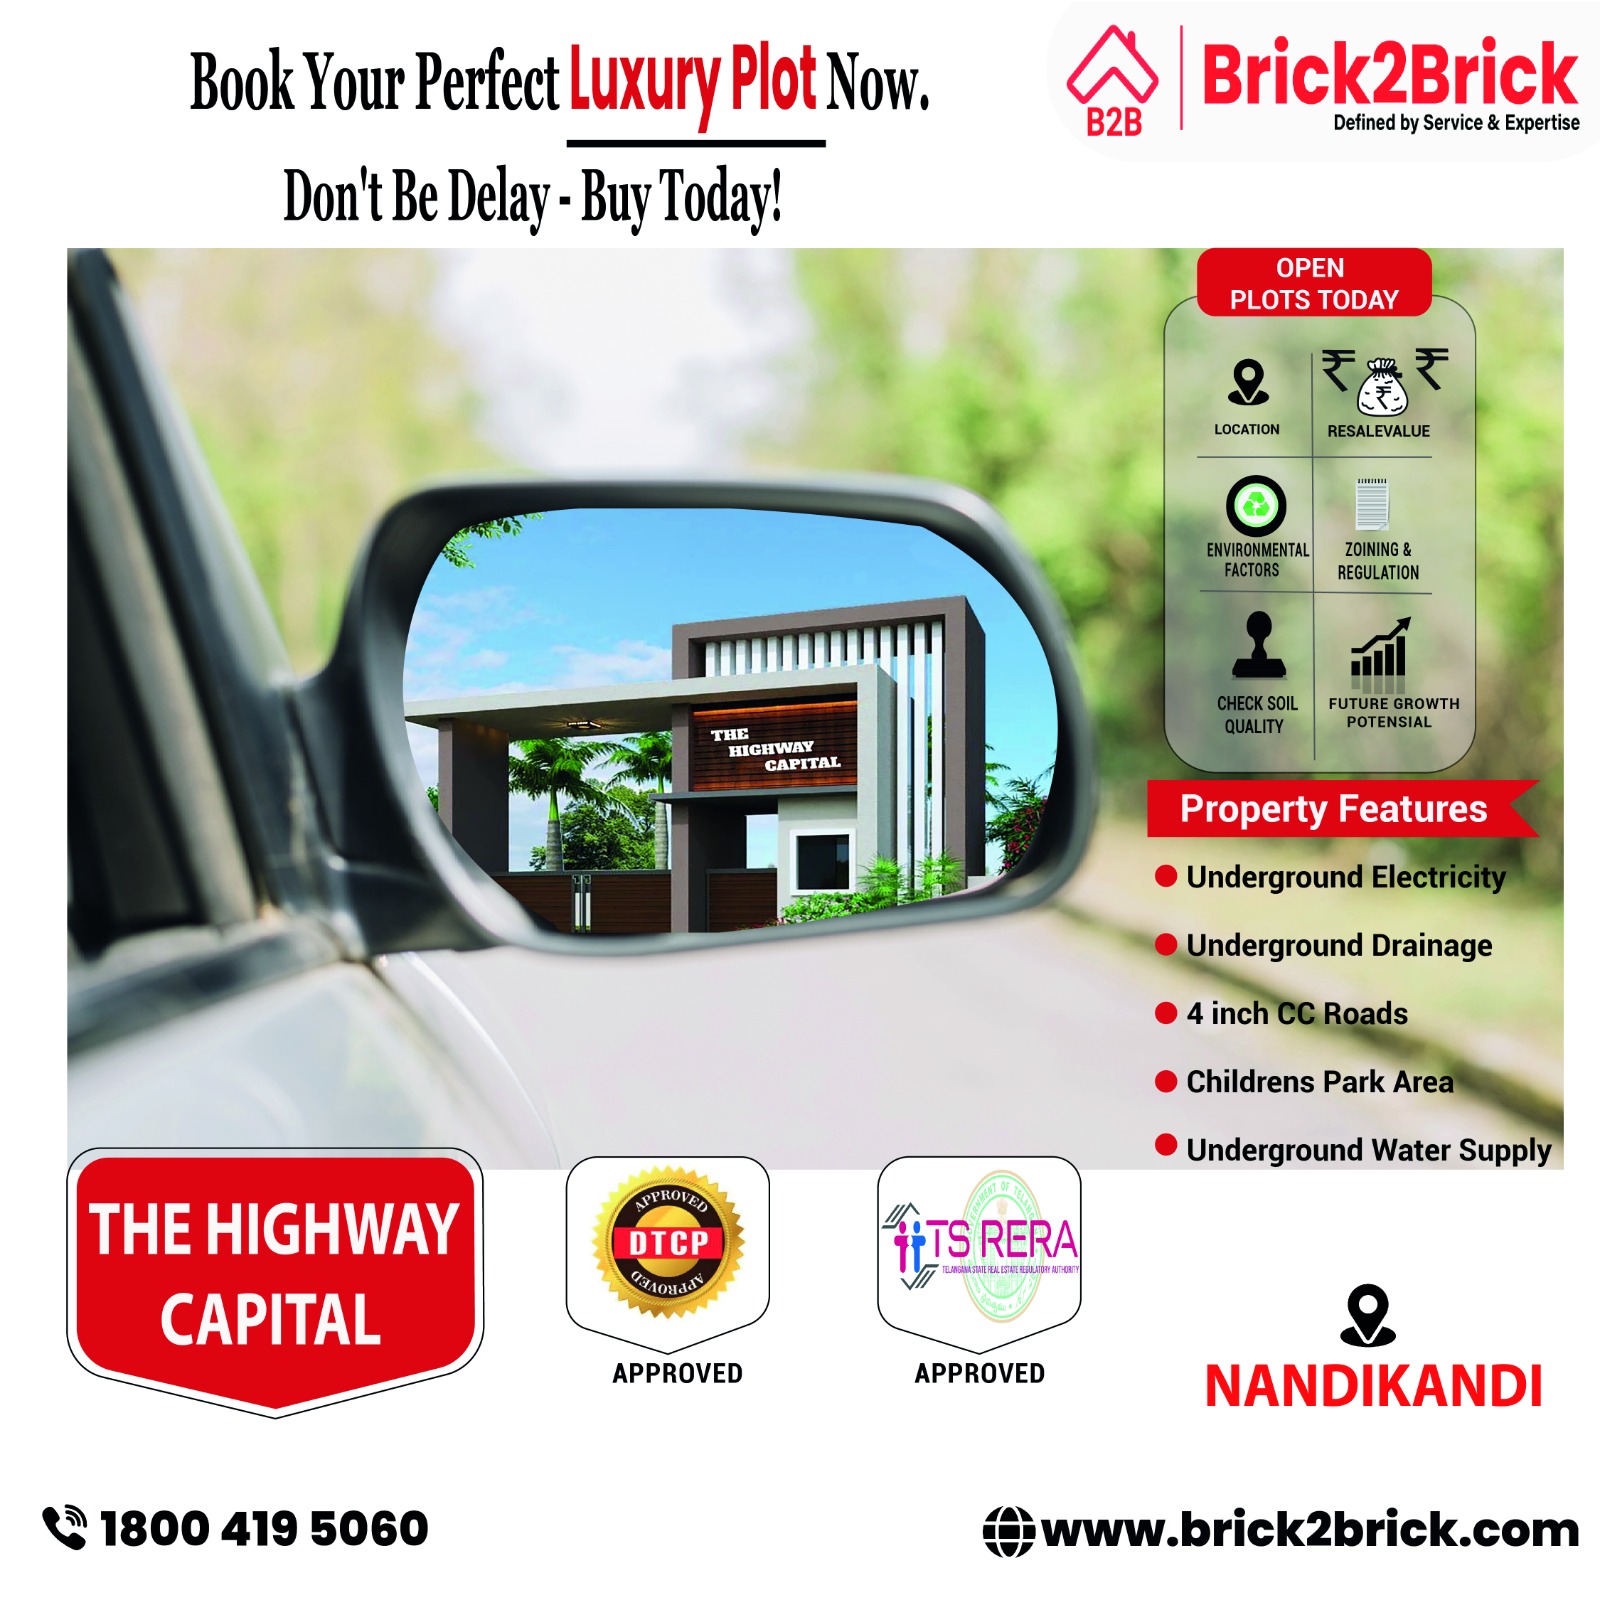  Open Plots for Sale in Hyderabad Premium Villa Plots in Nandikandi - Brick2Brick